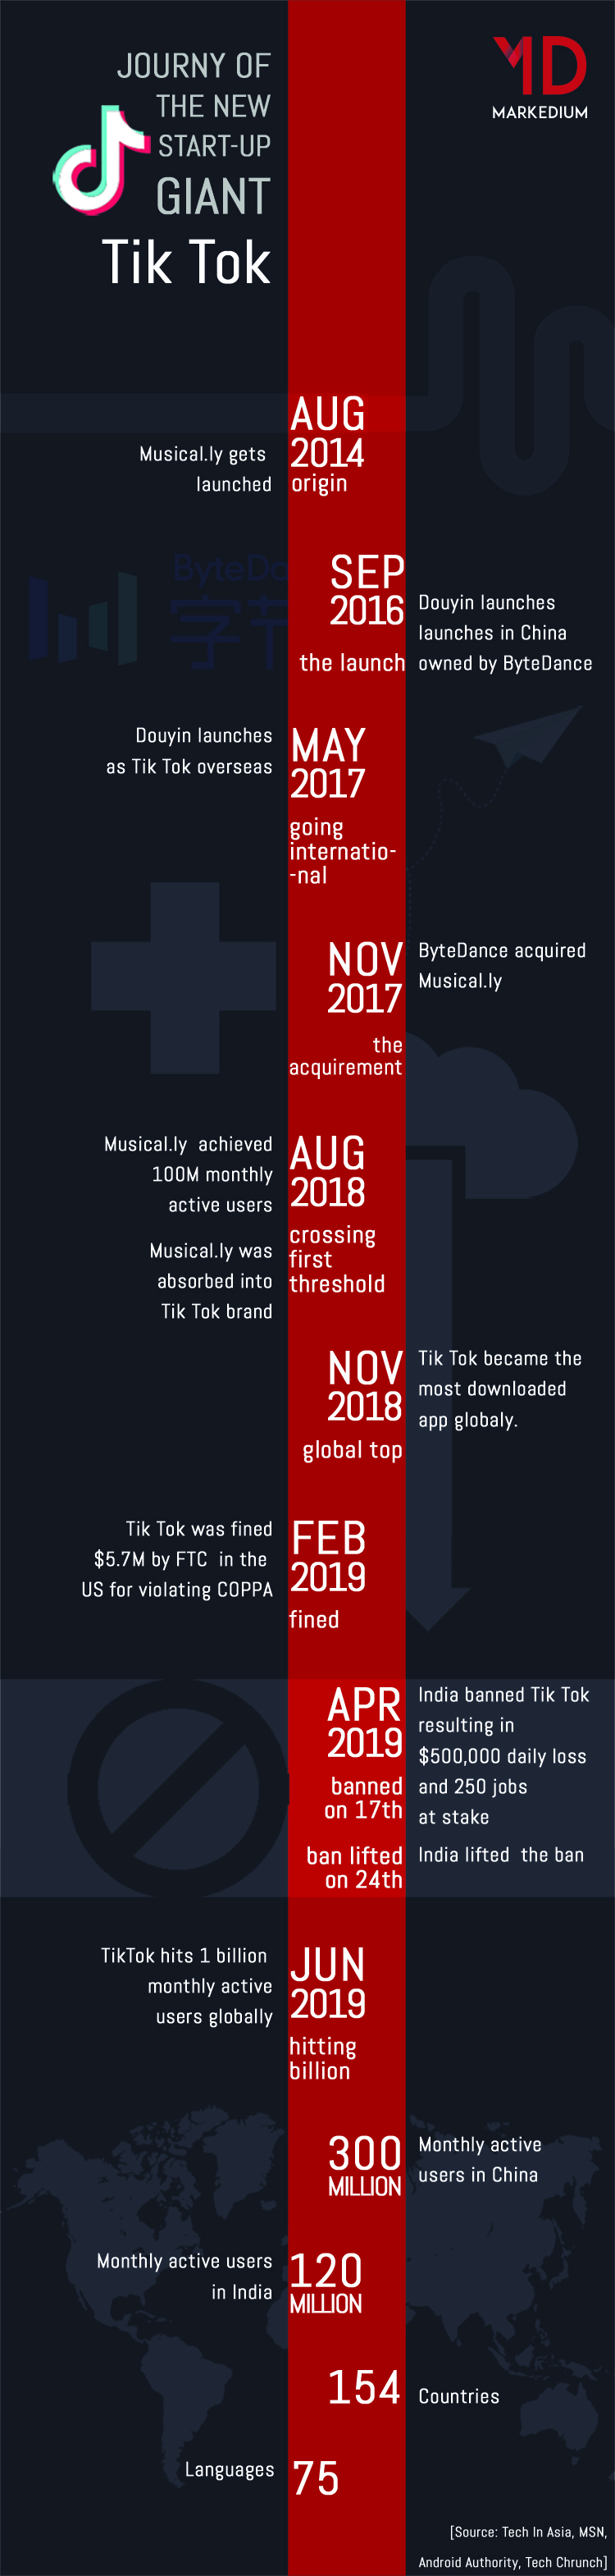 TikTok Journey Infographic-Markedium